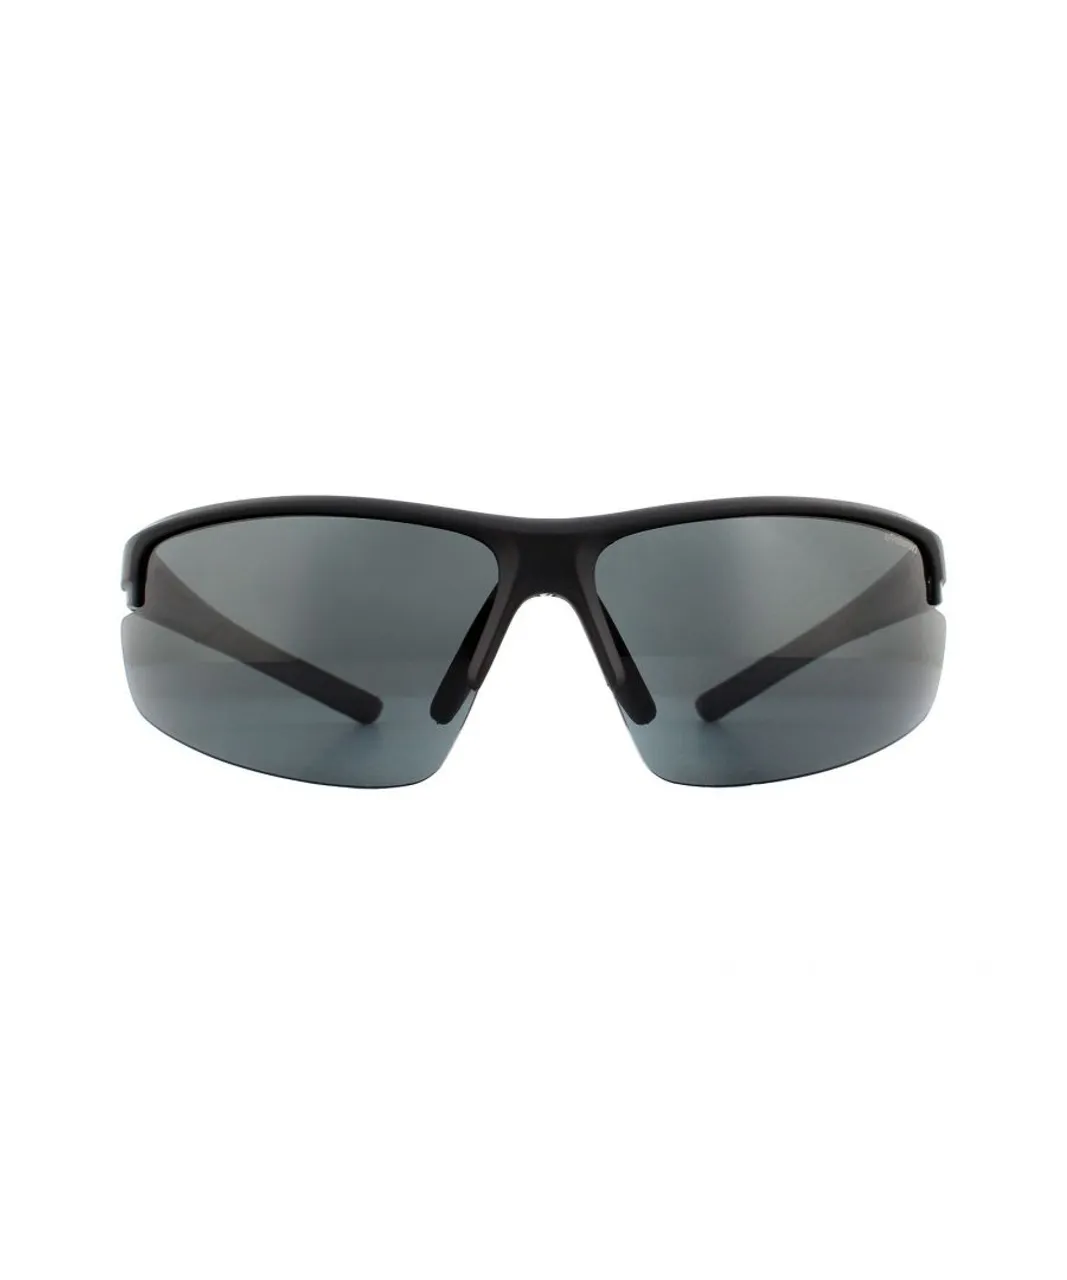 Polaroid Sport Mens Black Grey Polarized Sunglasses - One